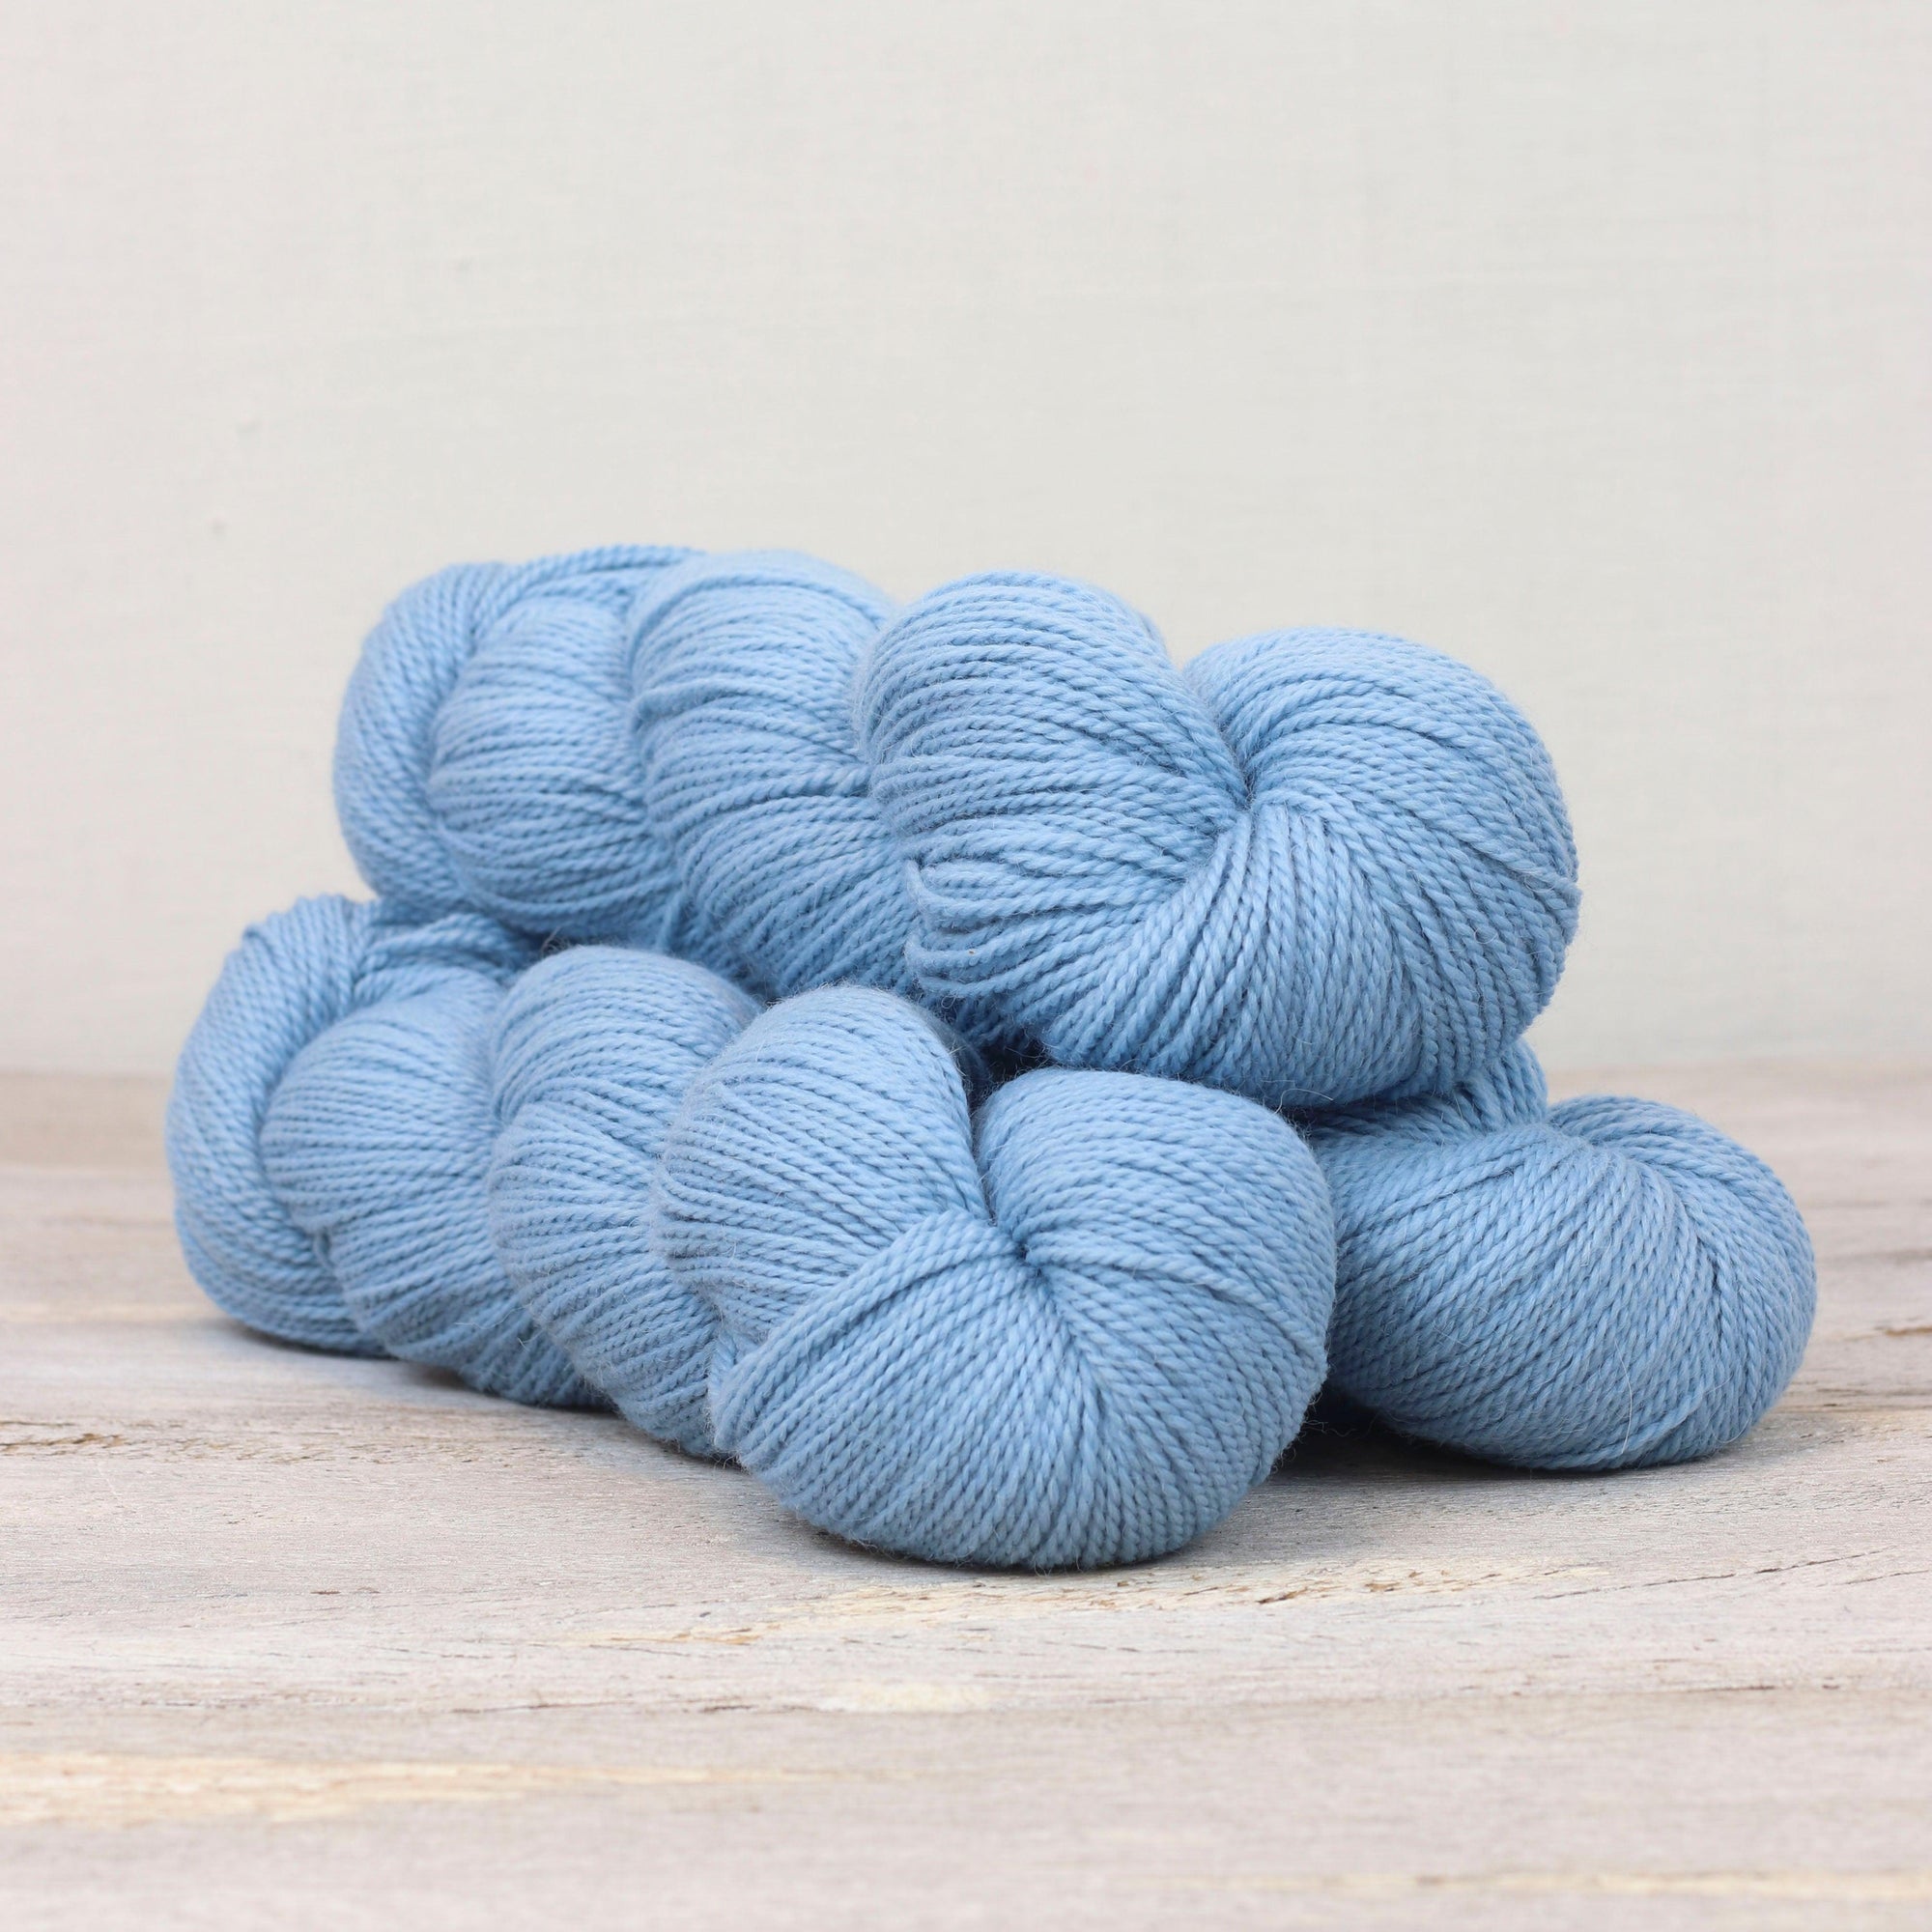 The Fibre Co. The Fibre Co. Amble - Clear Sky - 4ply Knitting Yarn